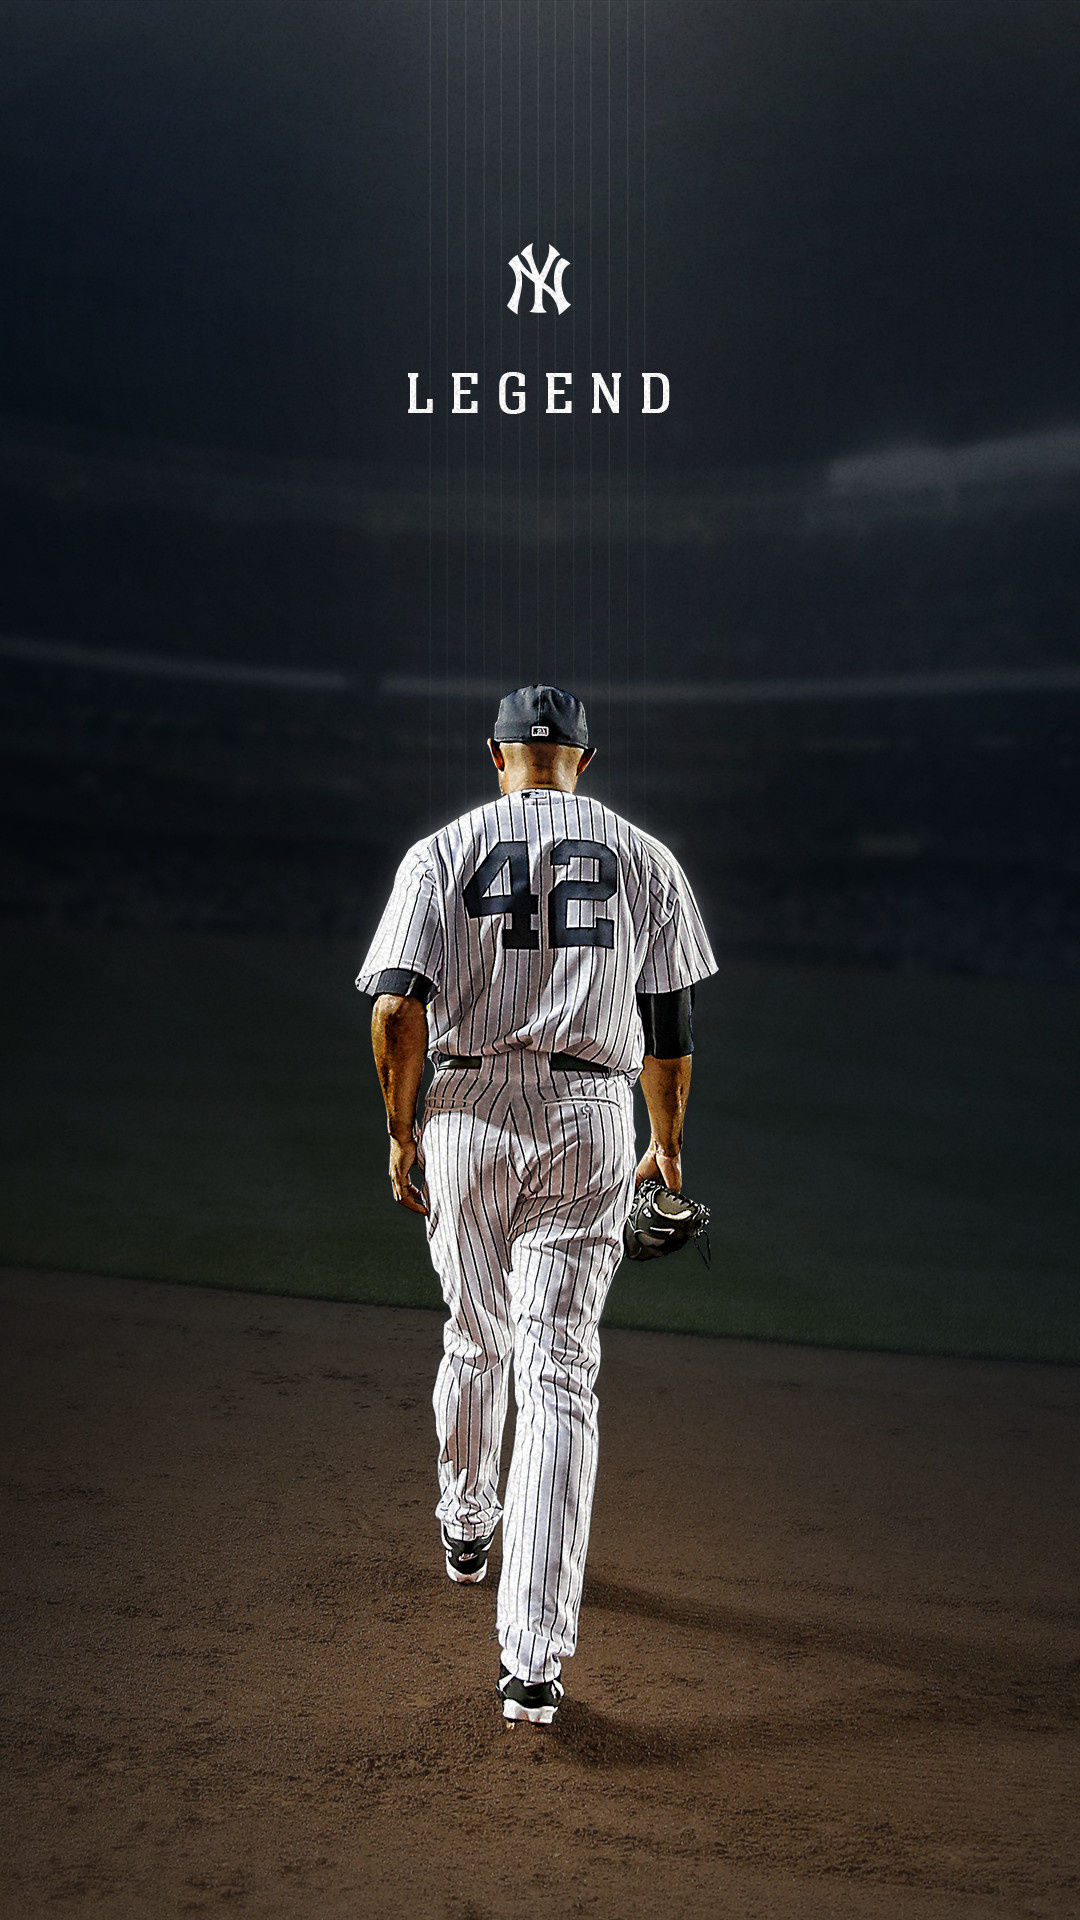 HD wallpaper, Baseball Powerhouses, Yankees Stars, Samsung 1080P Mariano Rivera Background Image, Mariano Rivera, Aaron Judge, 1080X1920 Full Hd Phone